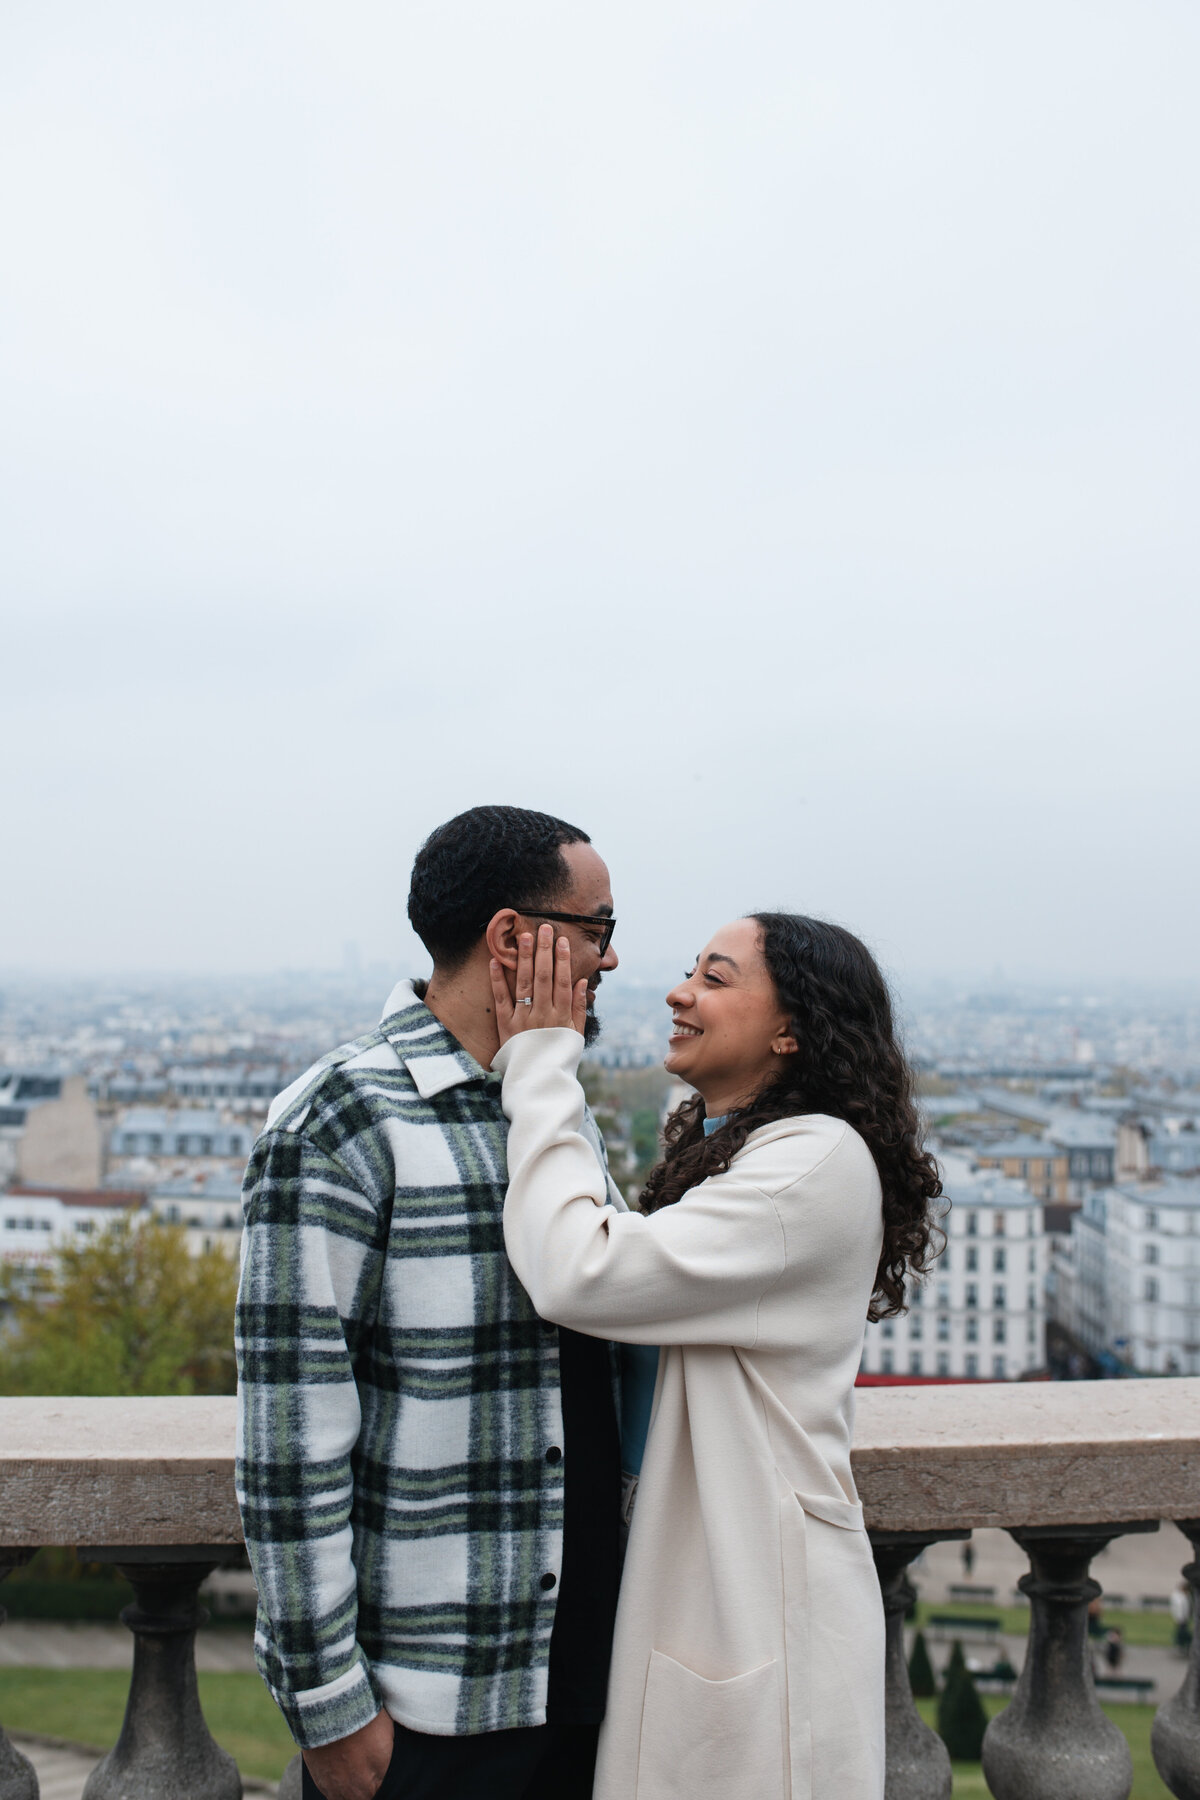 Couple Photoshoot in Paris